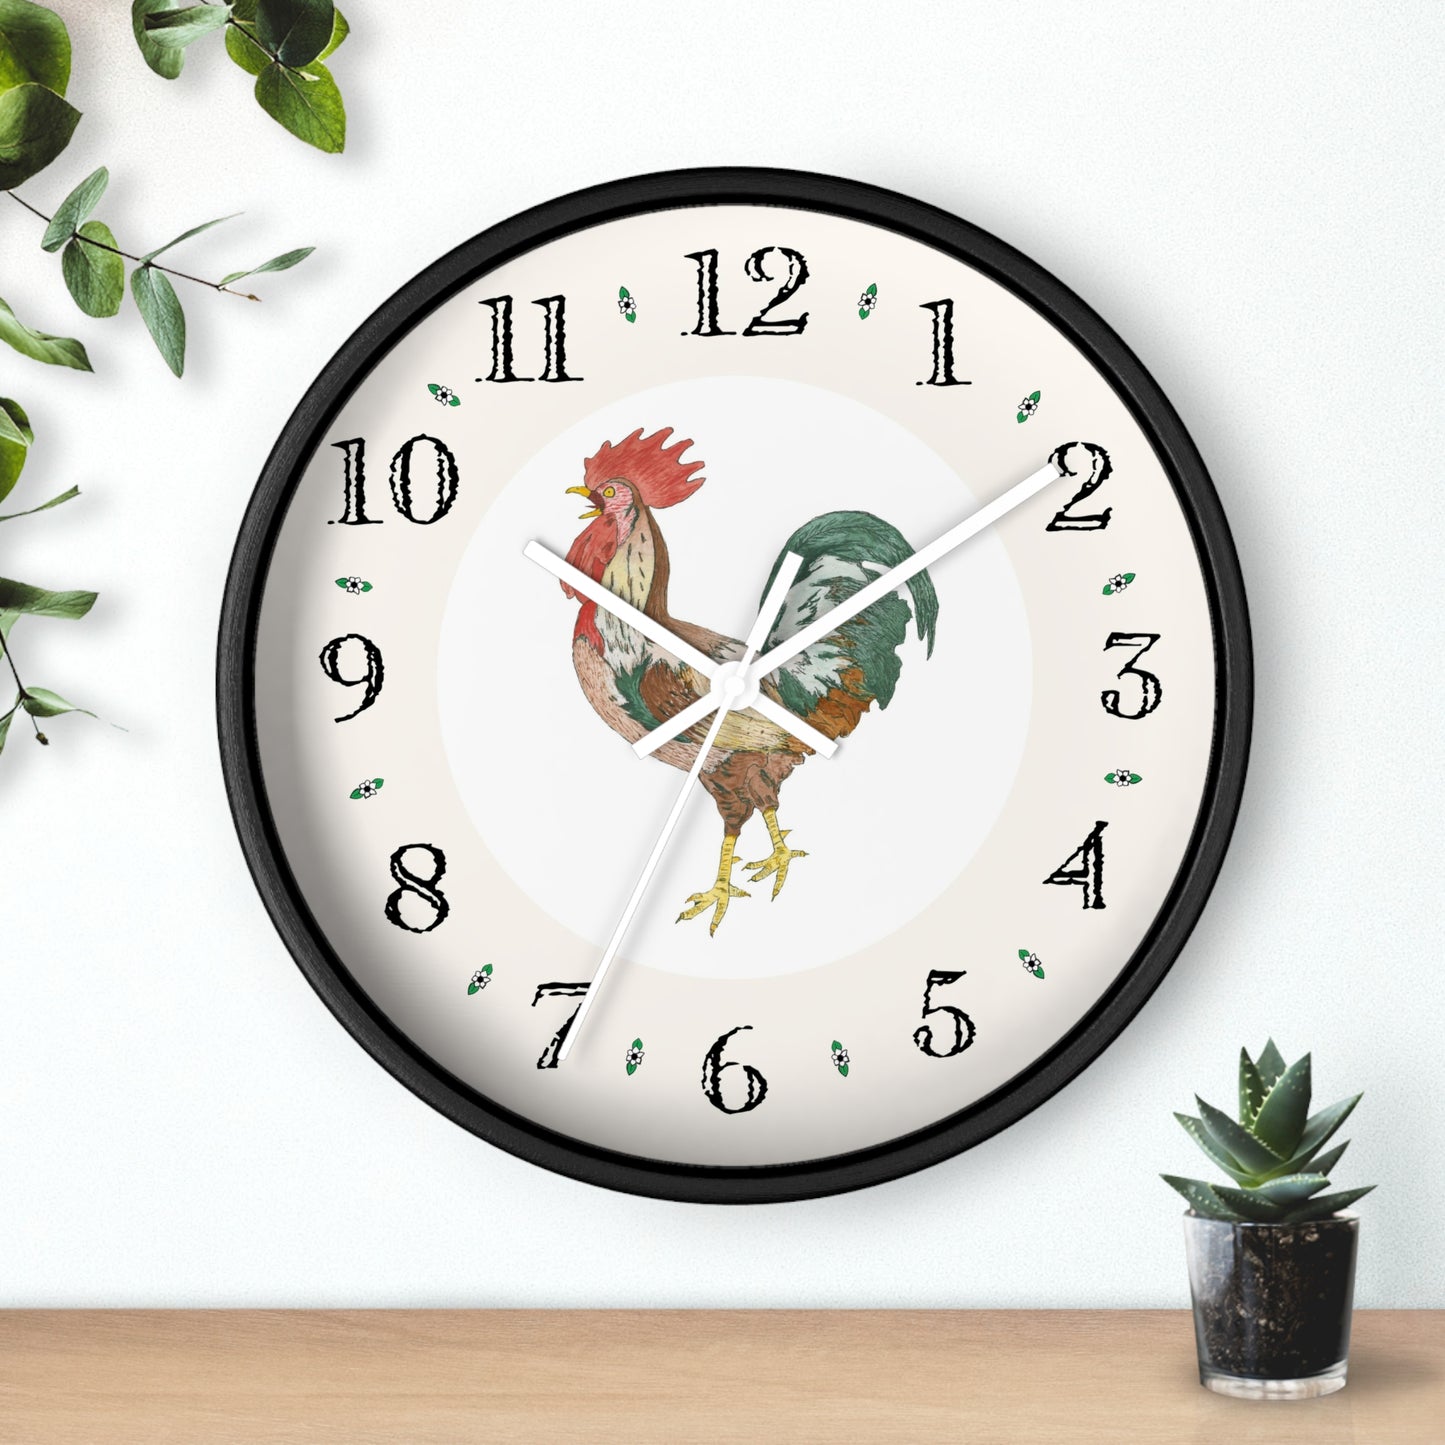 Joseph Rooster Heirloom Designer Clock